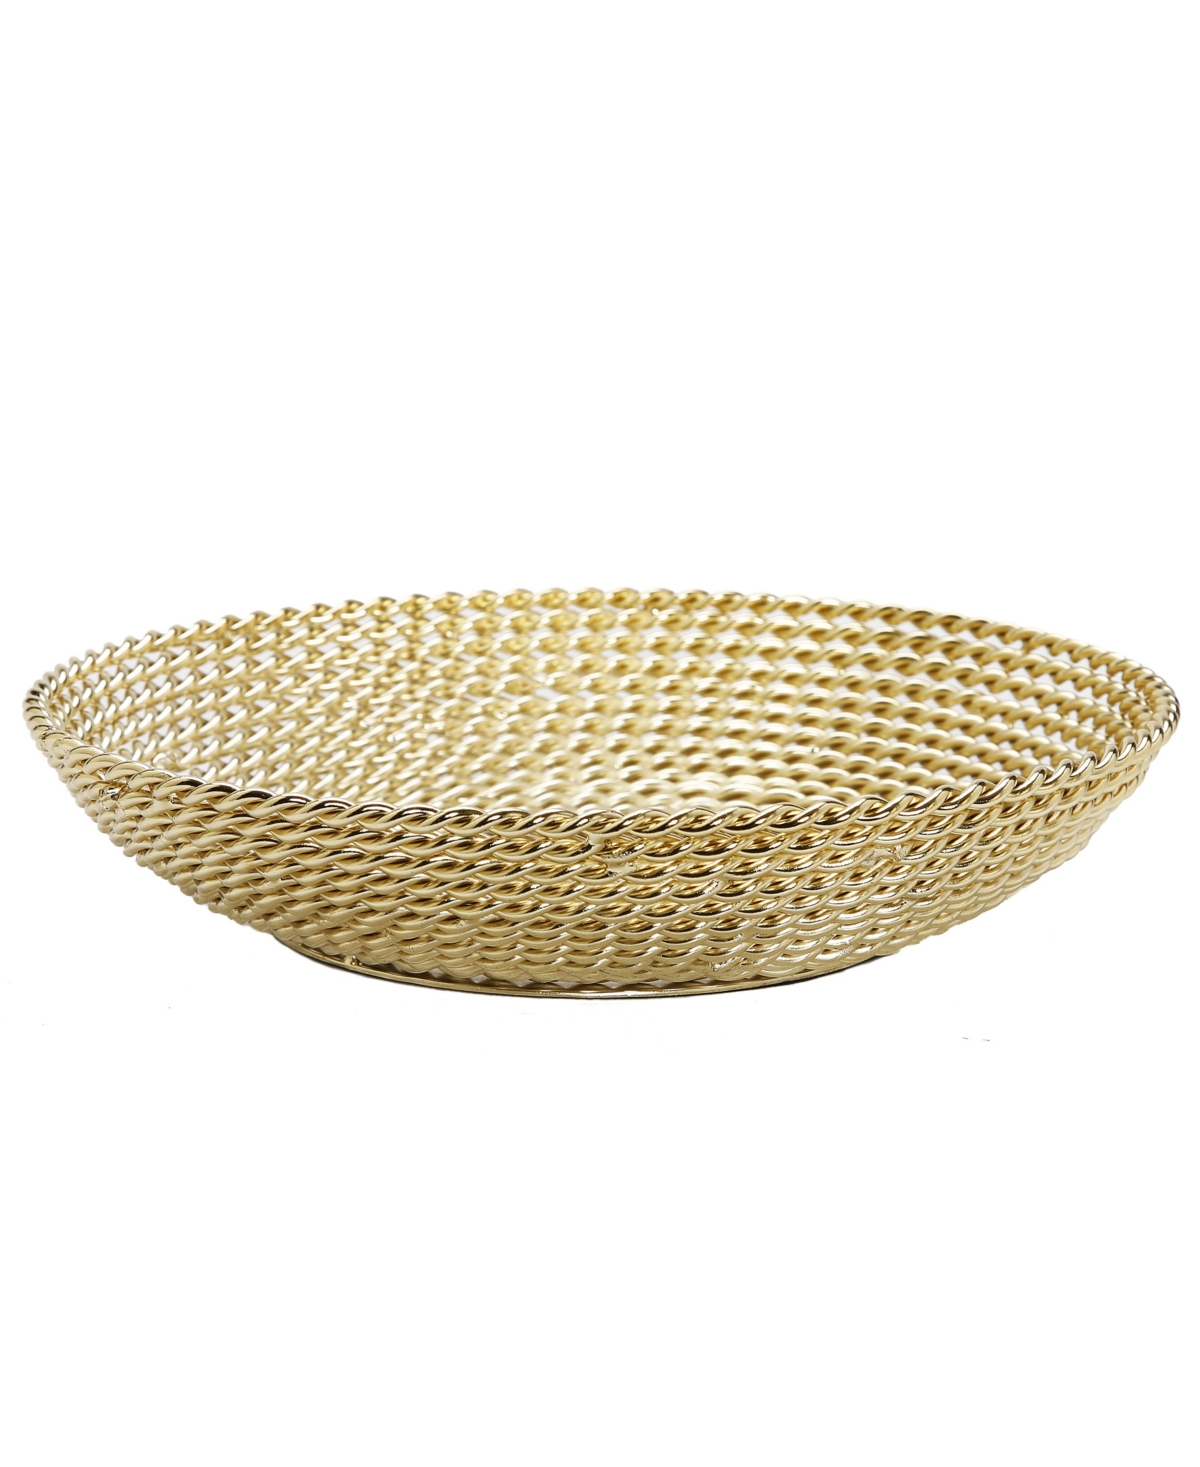 Decorative Bowl Rope Design - Gold-Tone